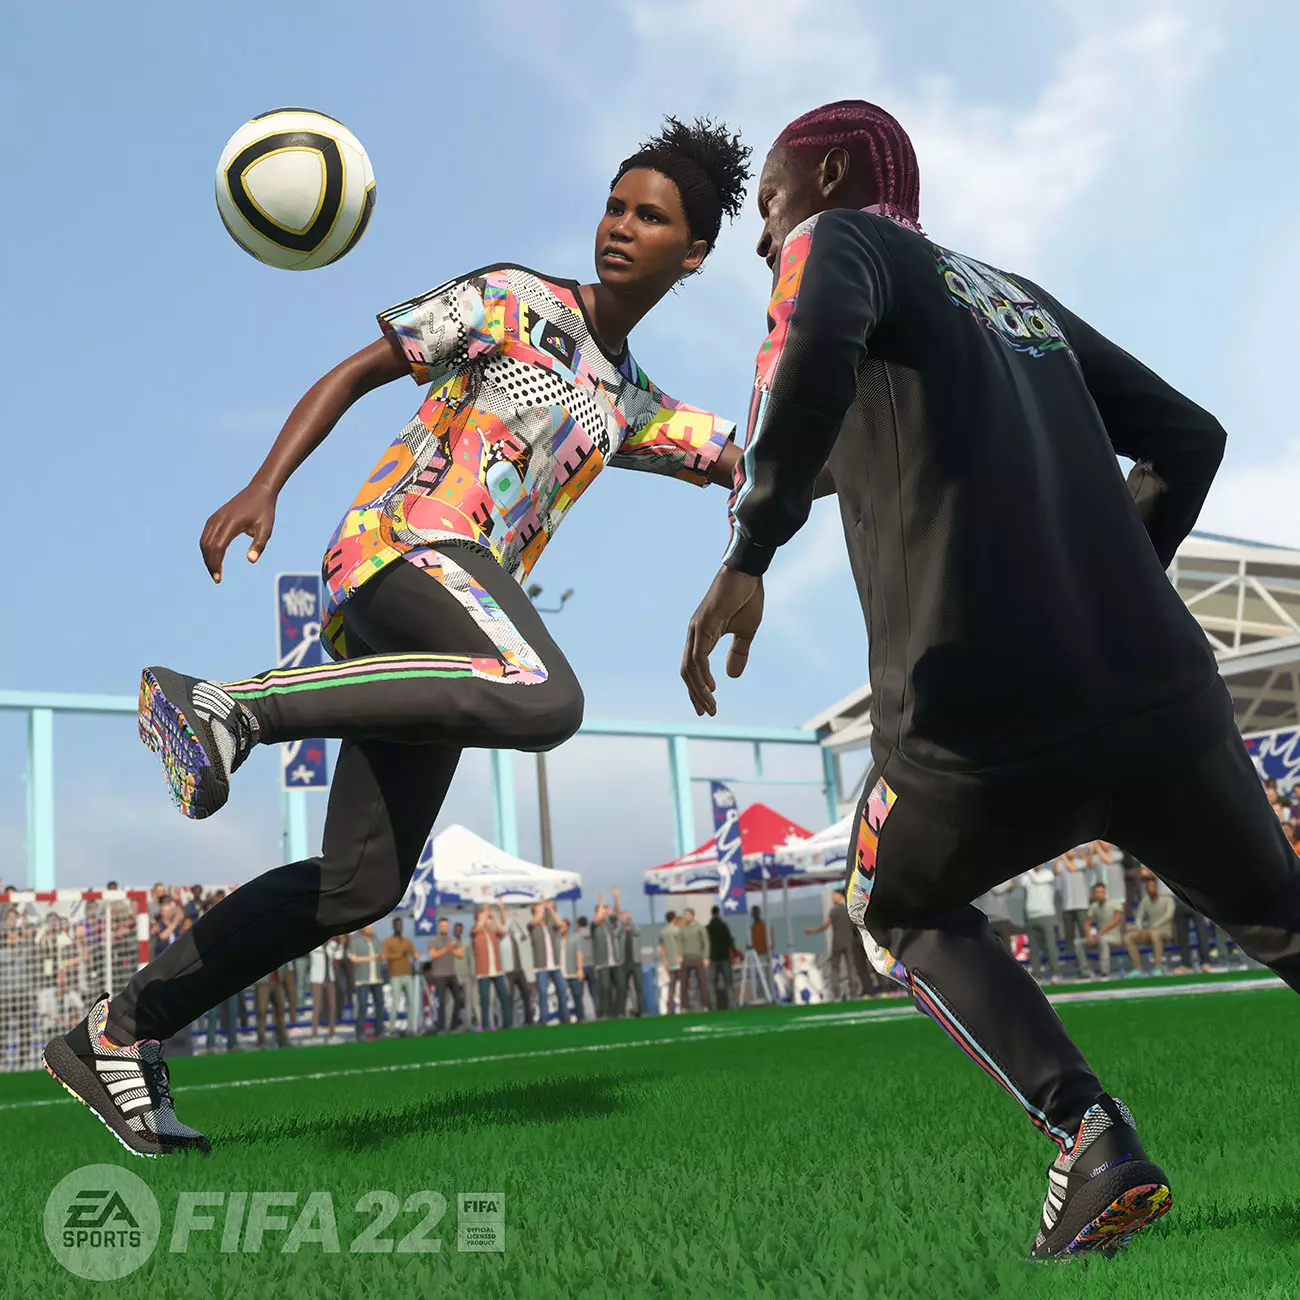 adidas Pride Collection X EA SPORTS FIFA 22